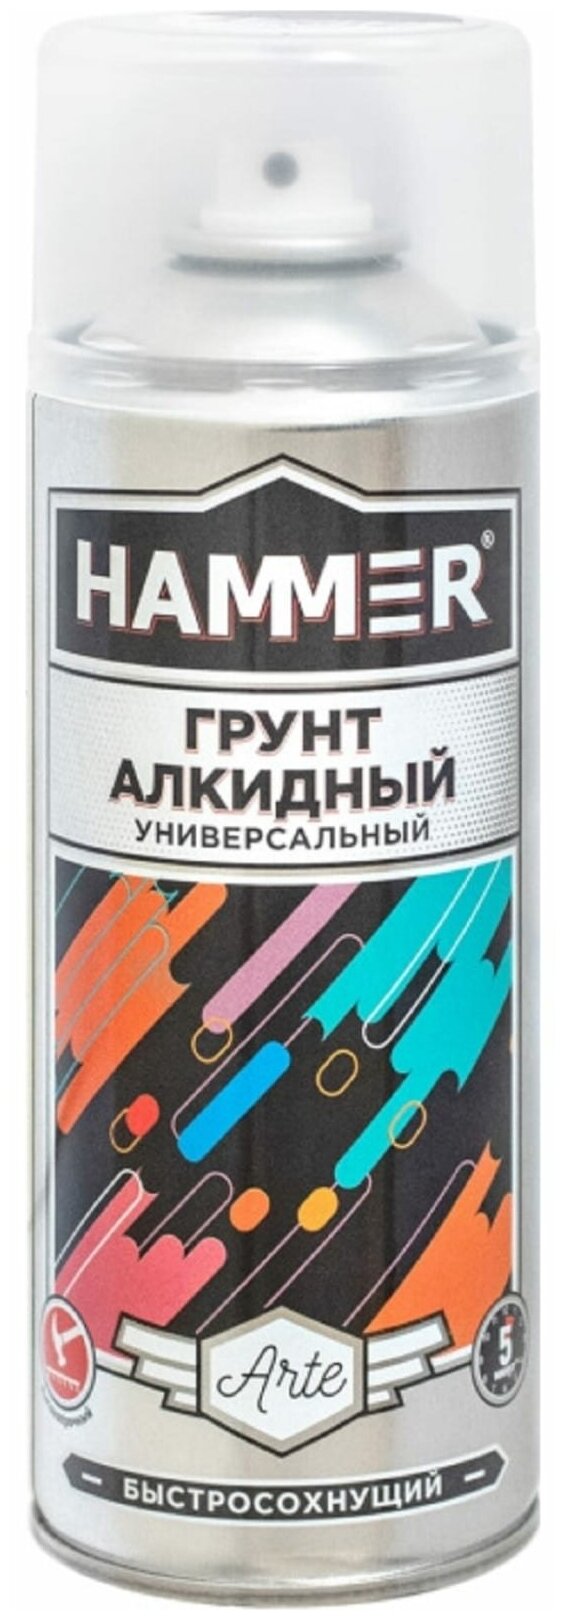 Грунт алкидный HAMMER серый 0,52л